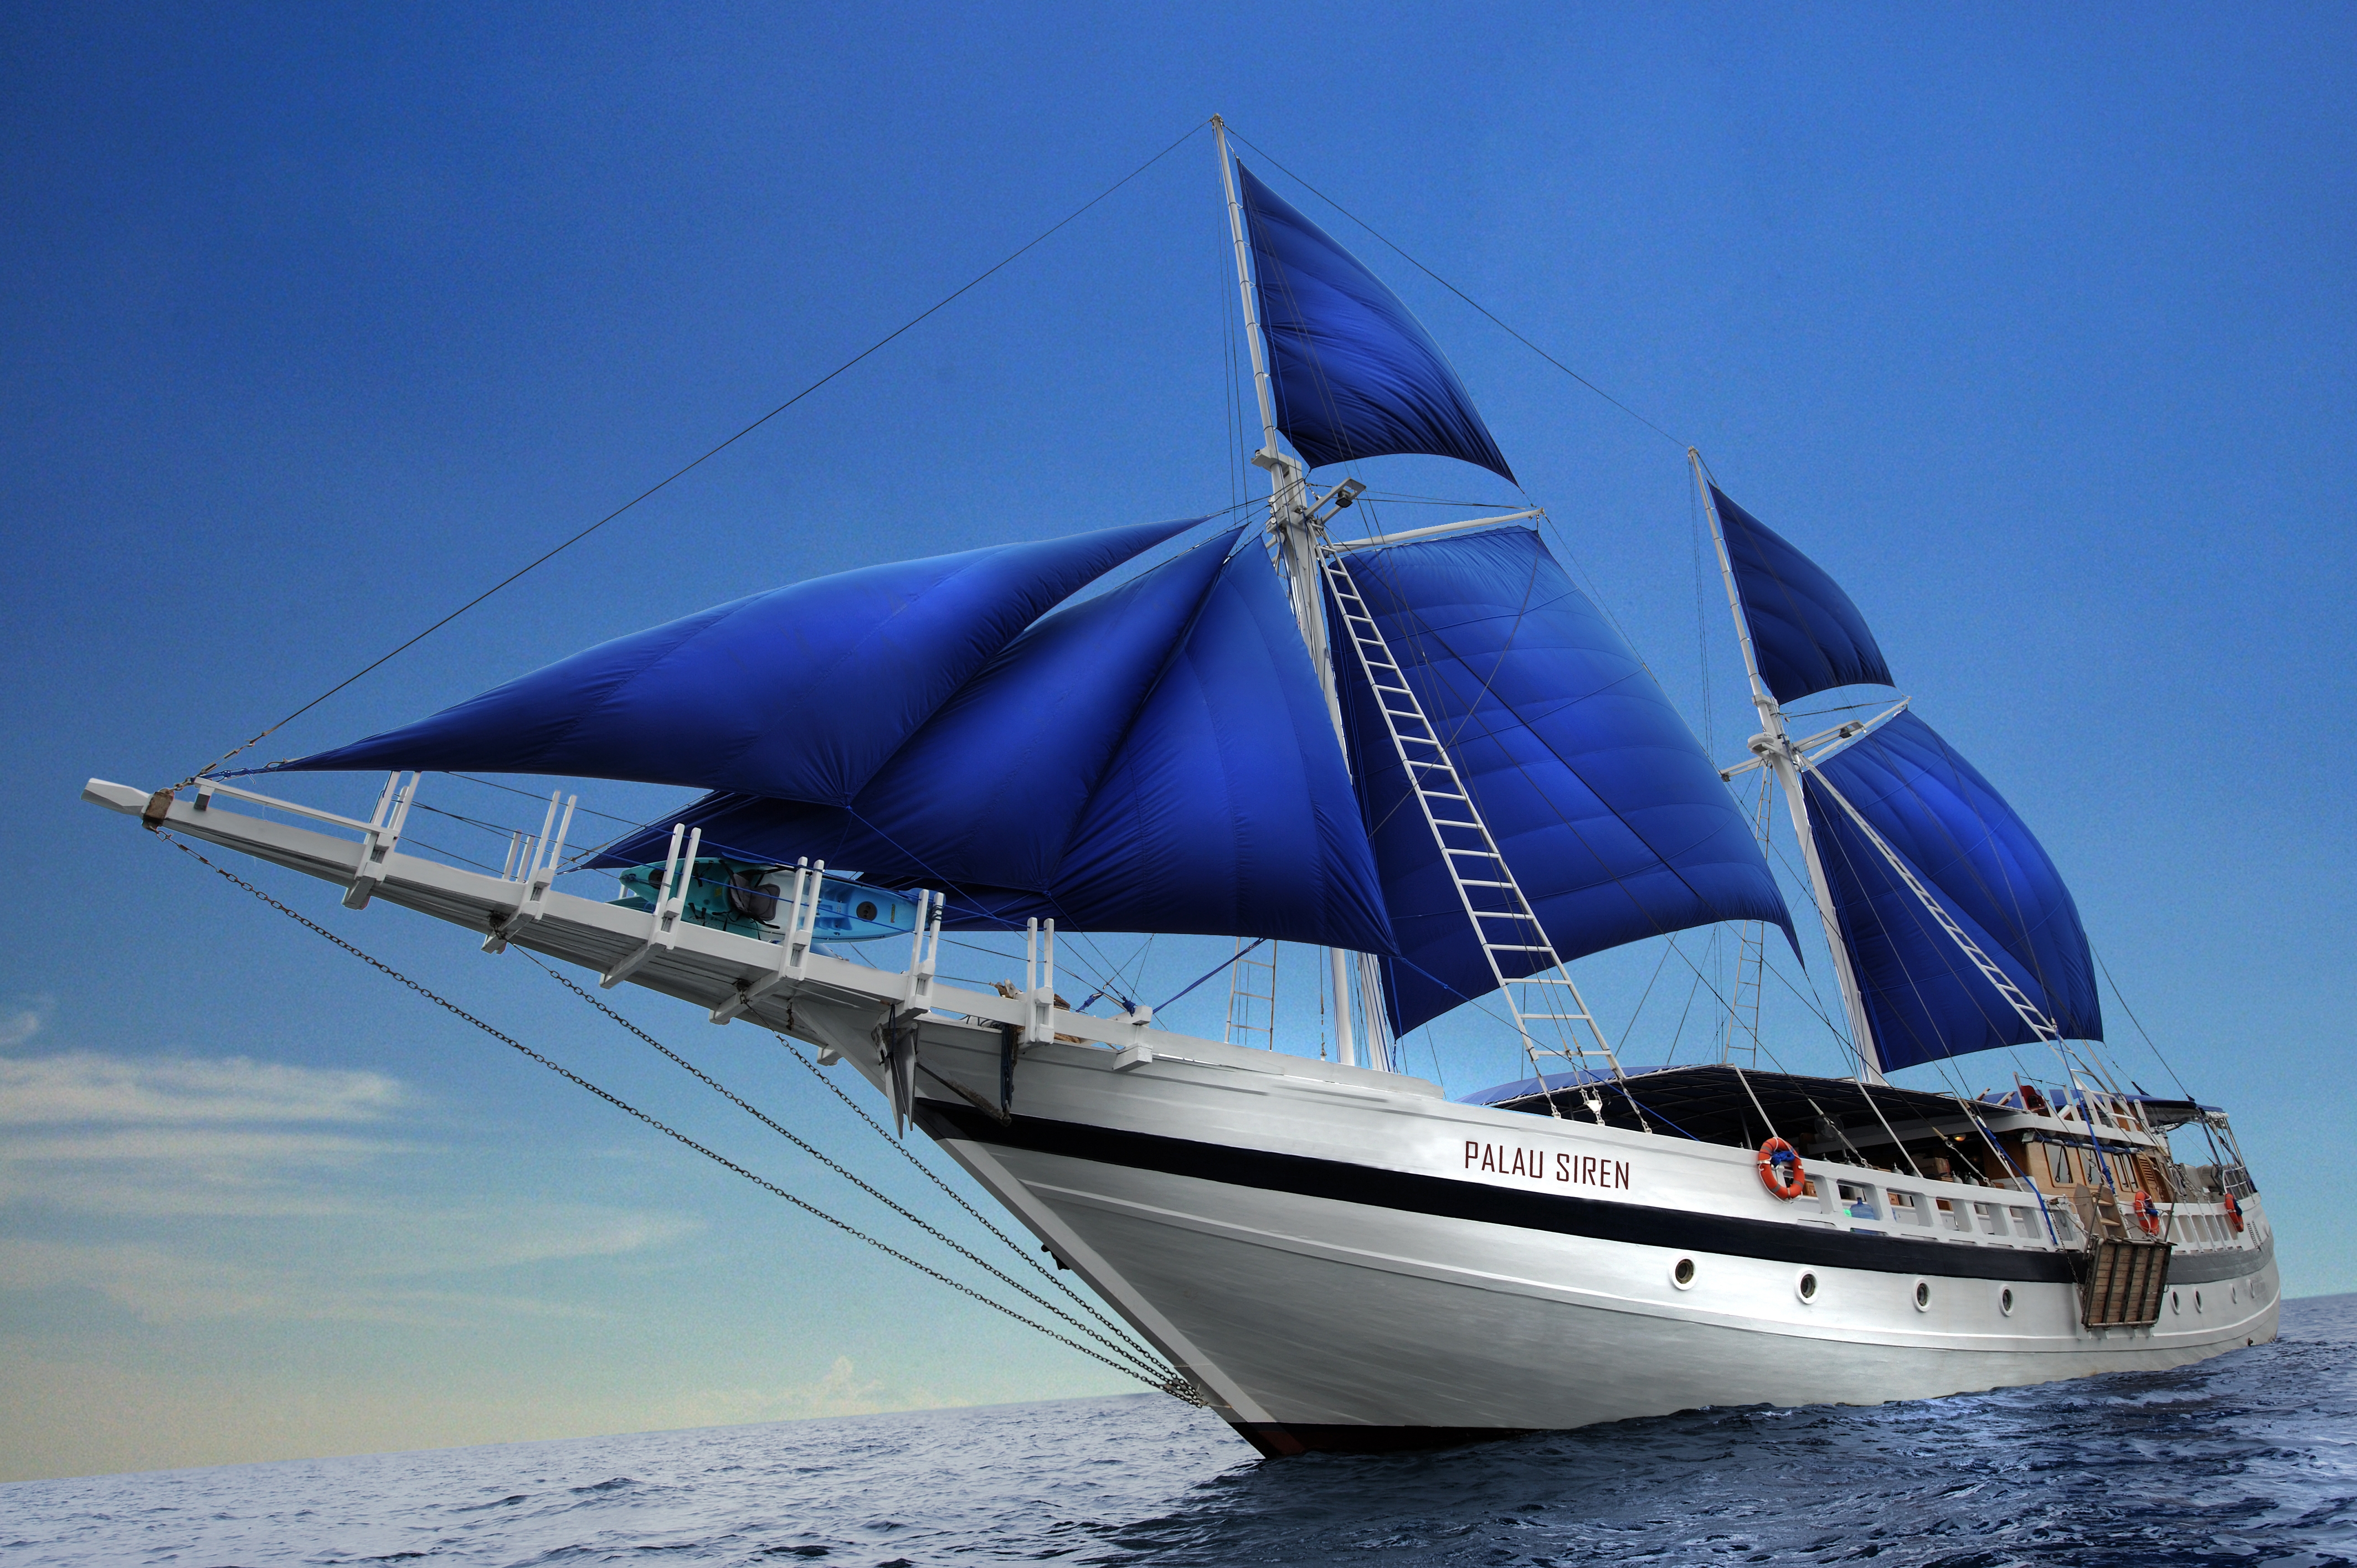 sail, yacht, miscellanea, miscellaneous, ocean, journey, relaxation, rest, sails